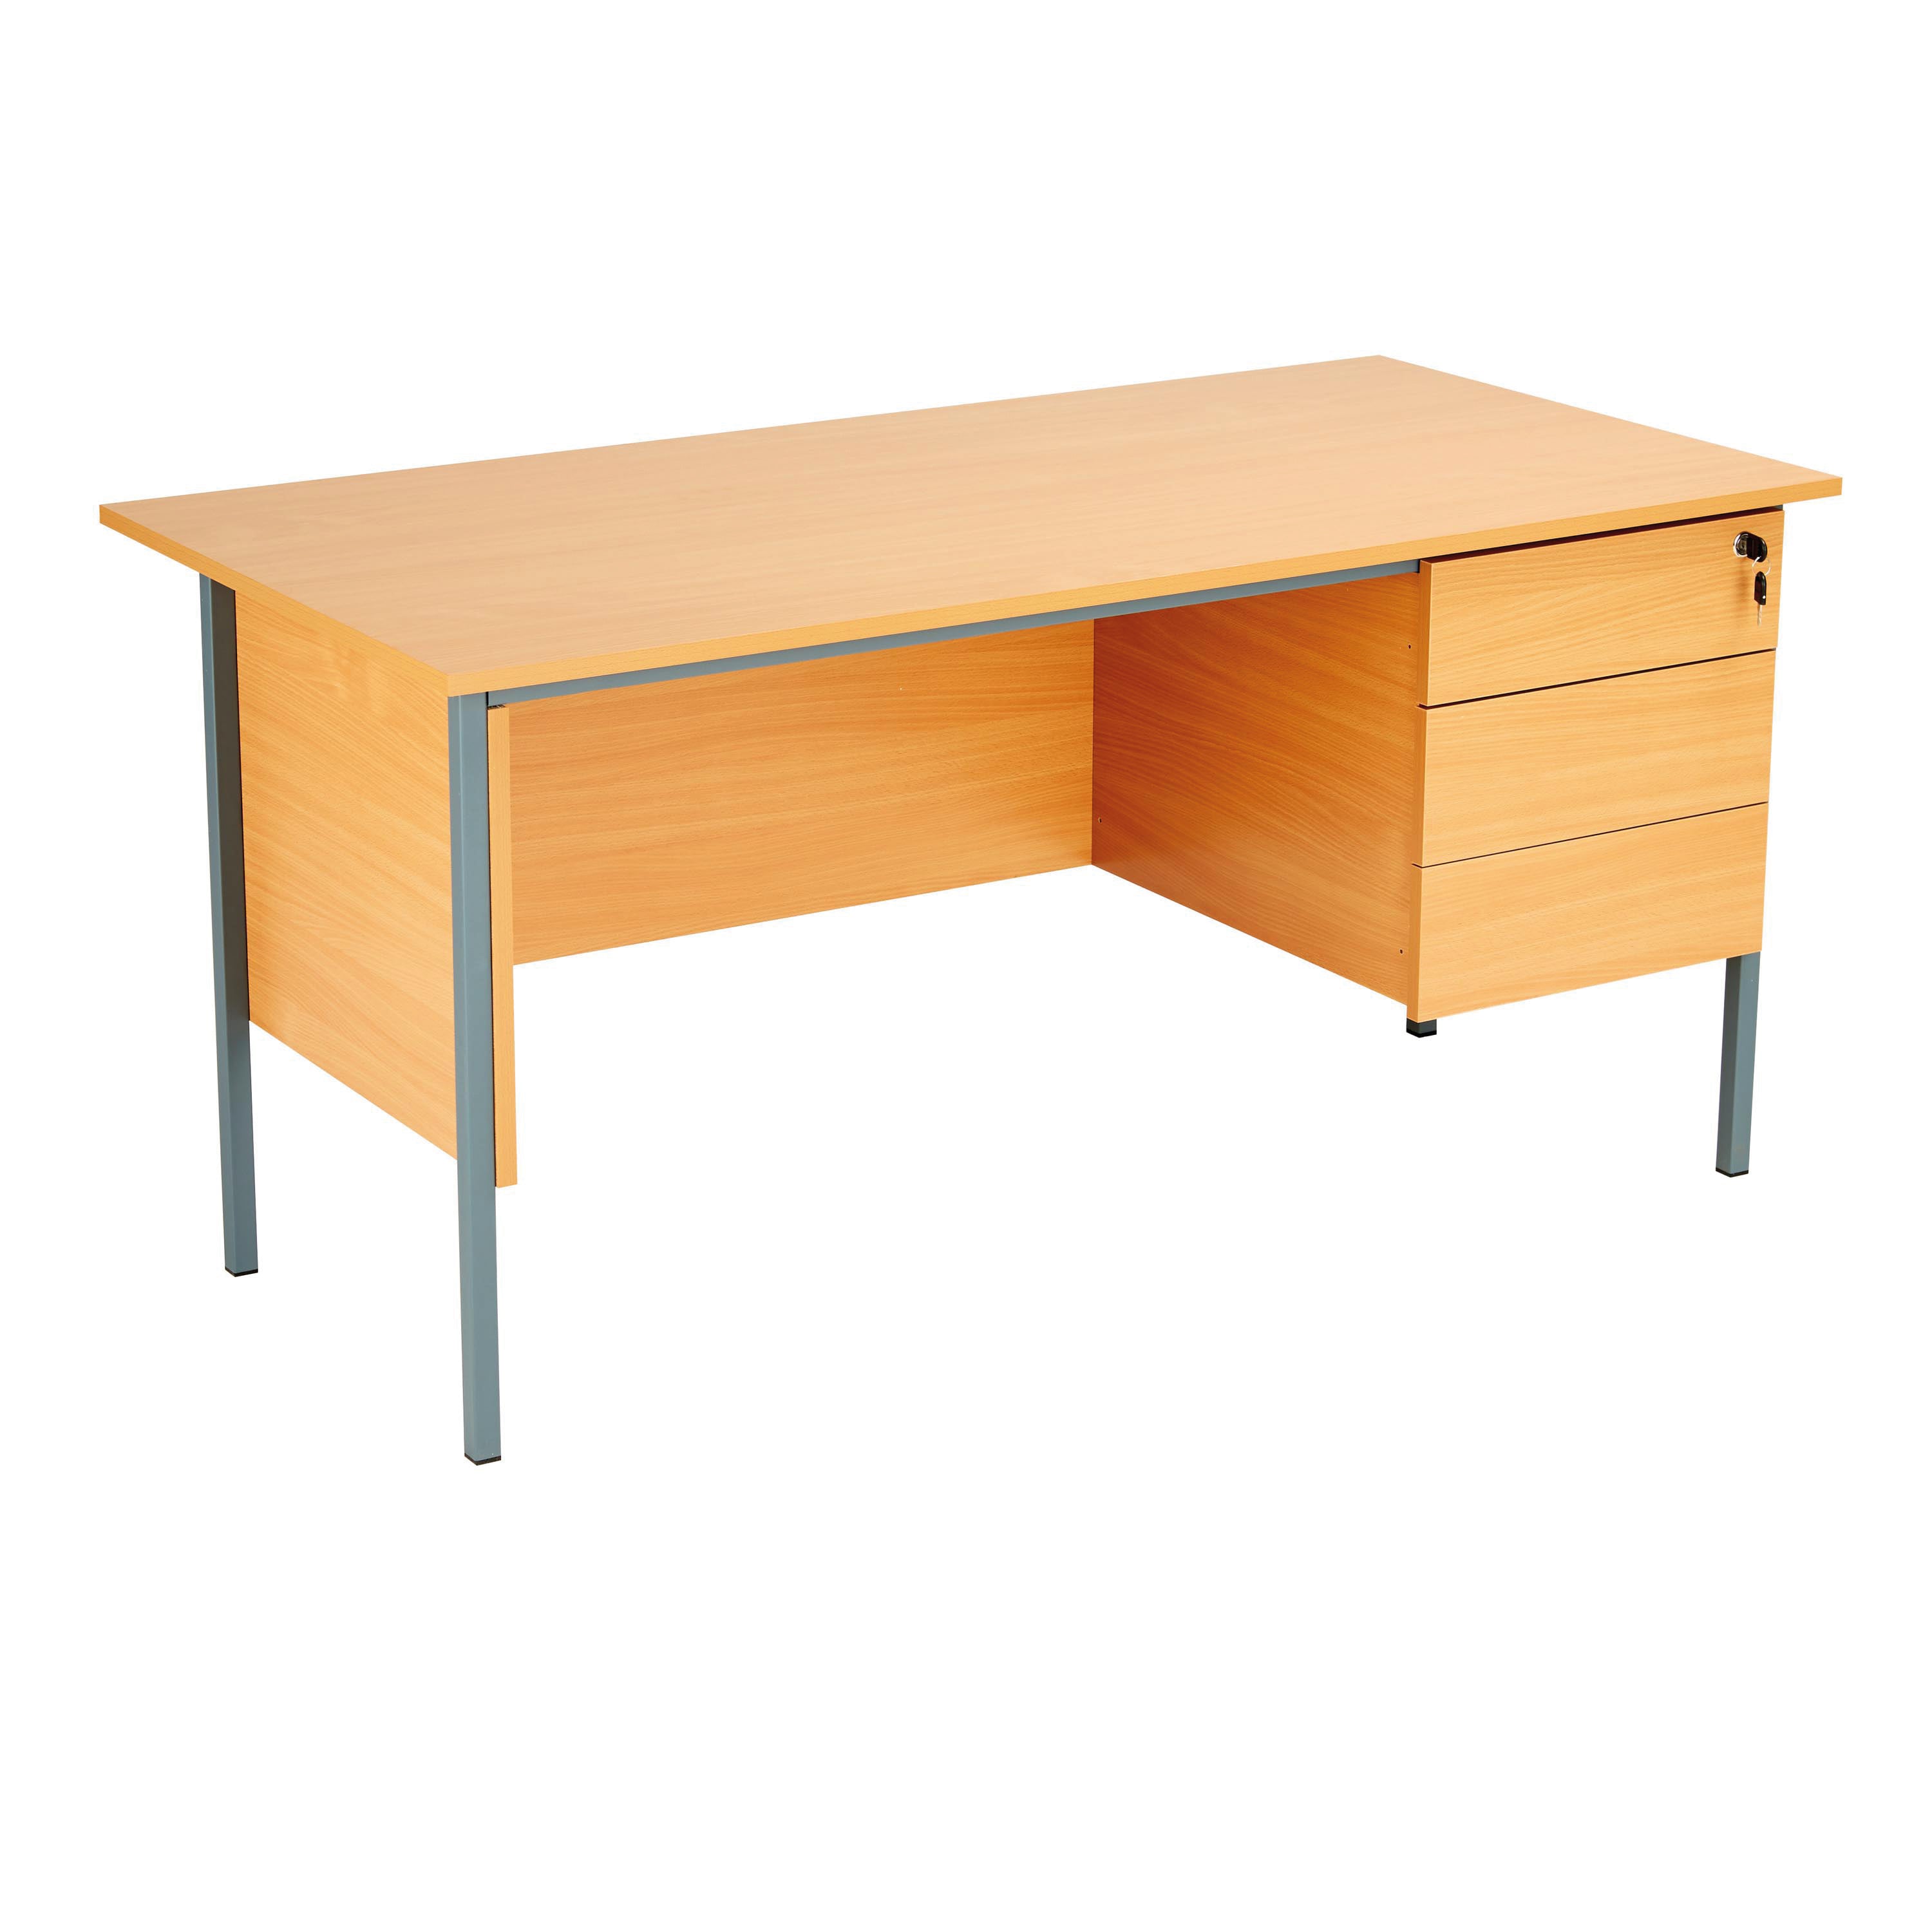 Serrion 4 Leg Desk 3 Drawer Pedestal 1500x750x725mm Ellmau Beech KF882389